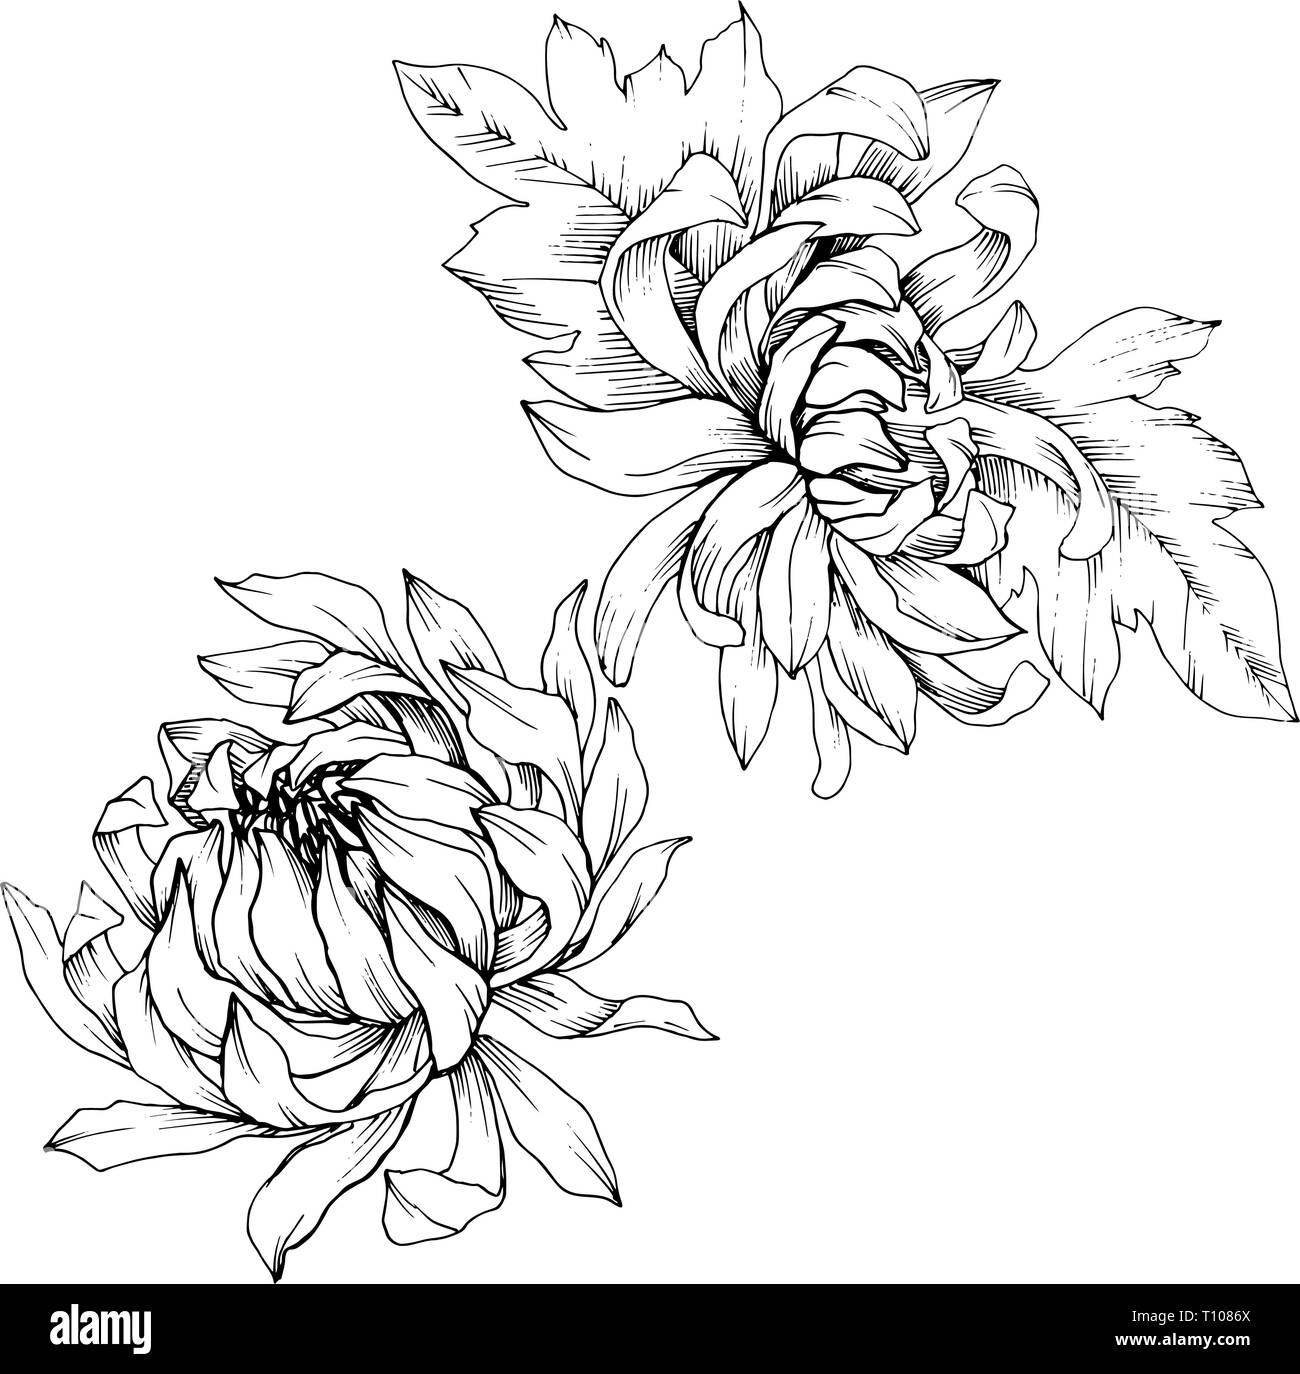 Vector Chrysanthemum floral botanical flowers. Black and white engraved ink art. Isolated flower illustration element. Stock Vector